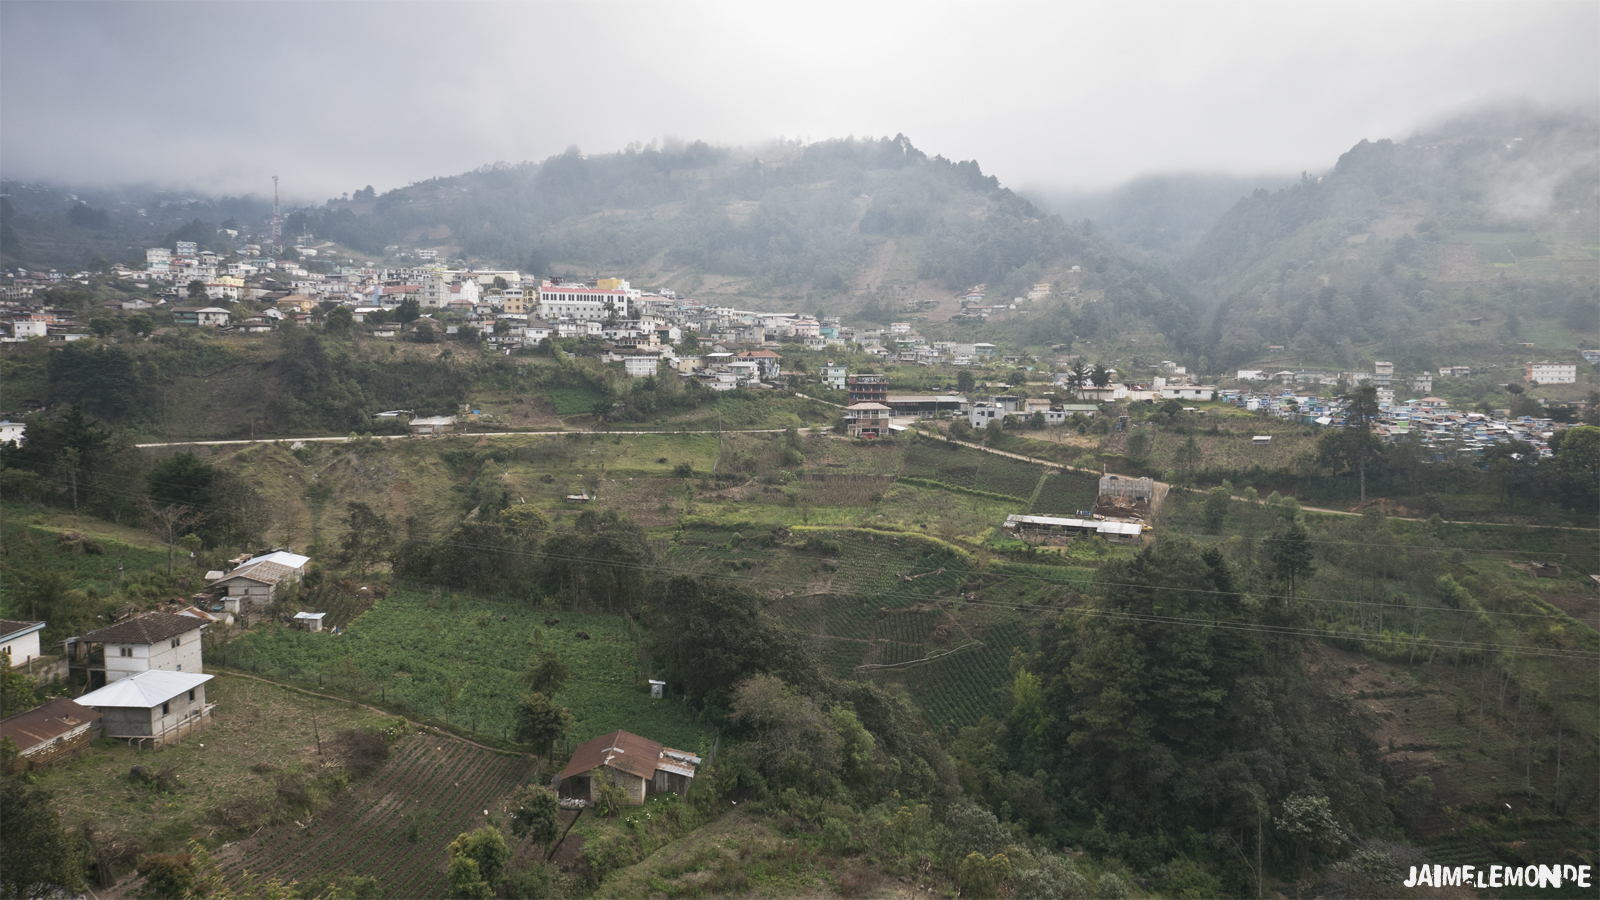 Vue sur le village de Todos Santos Cuchumatán au Guatemala - ©jaimelemonde.fr